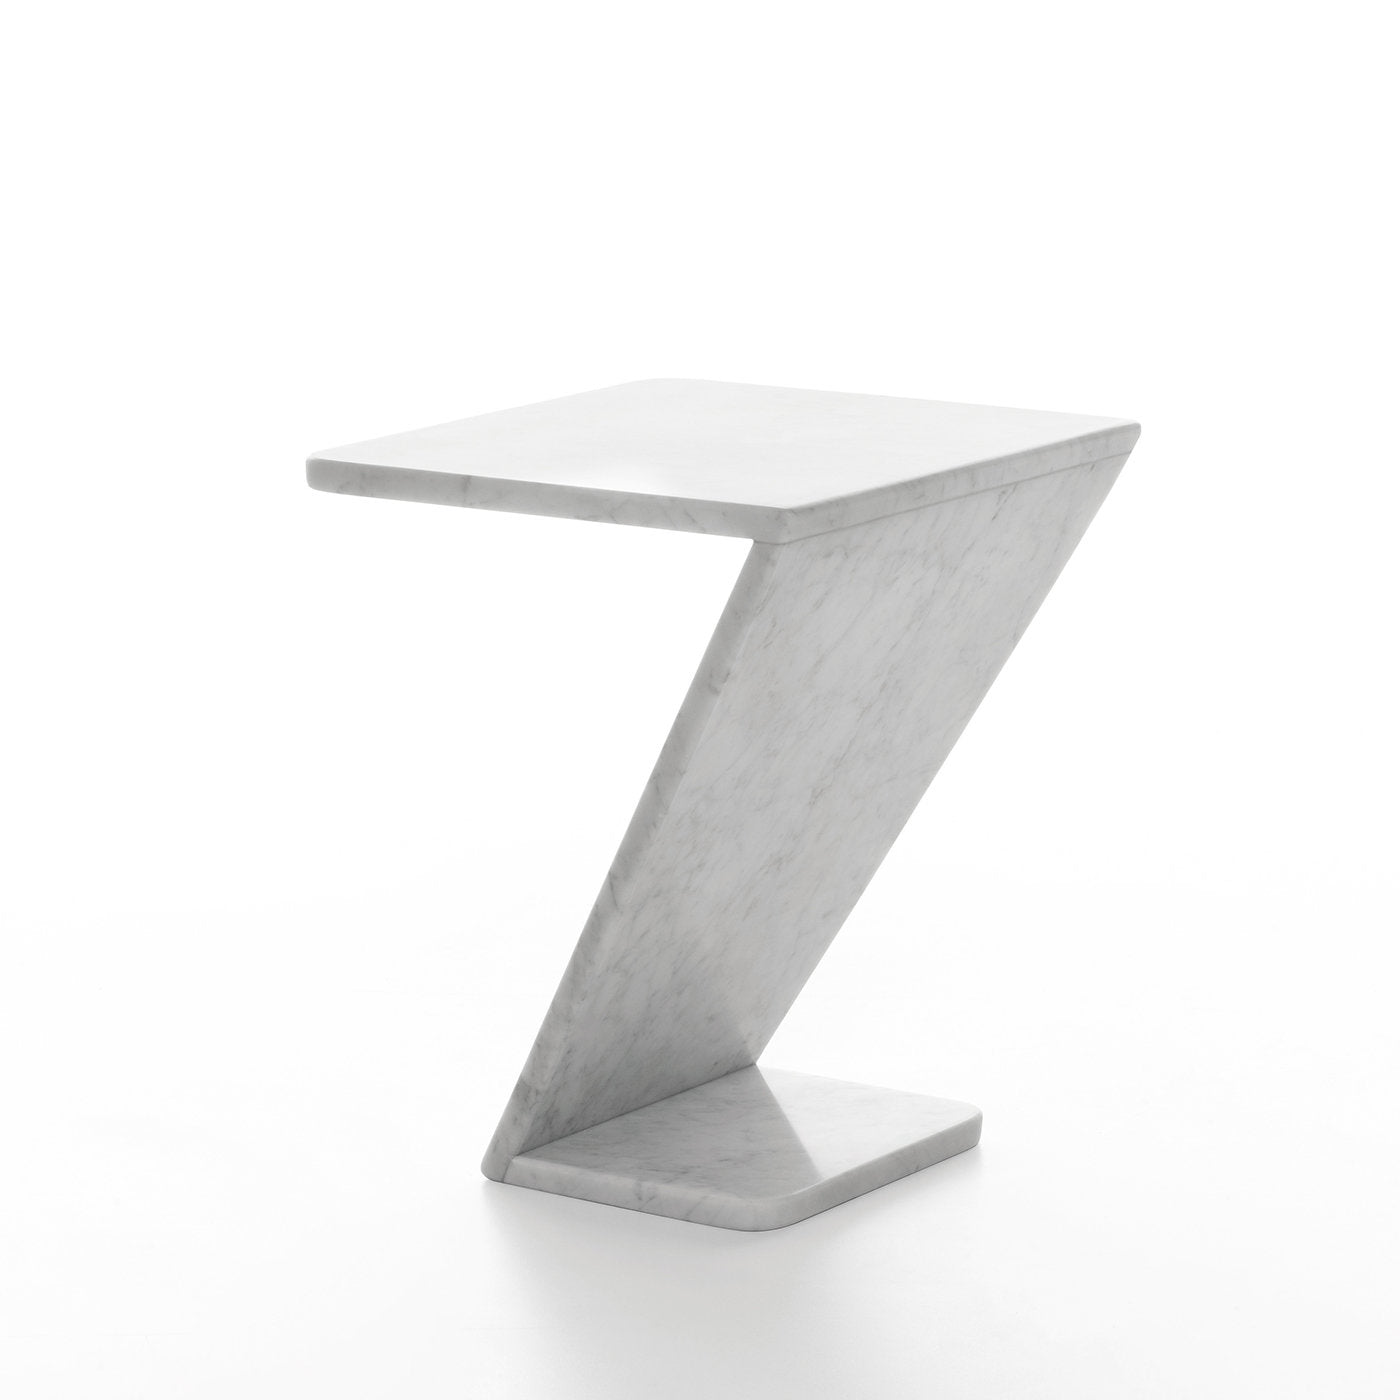 TILTINO SIDE TABLE - Design Thomas Sandell 2011 - Alternative view 1